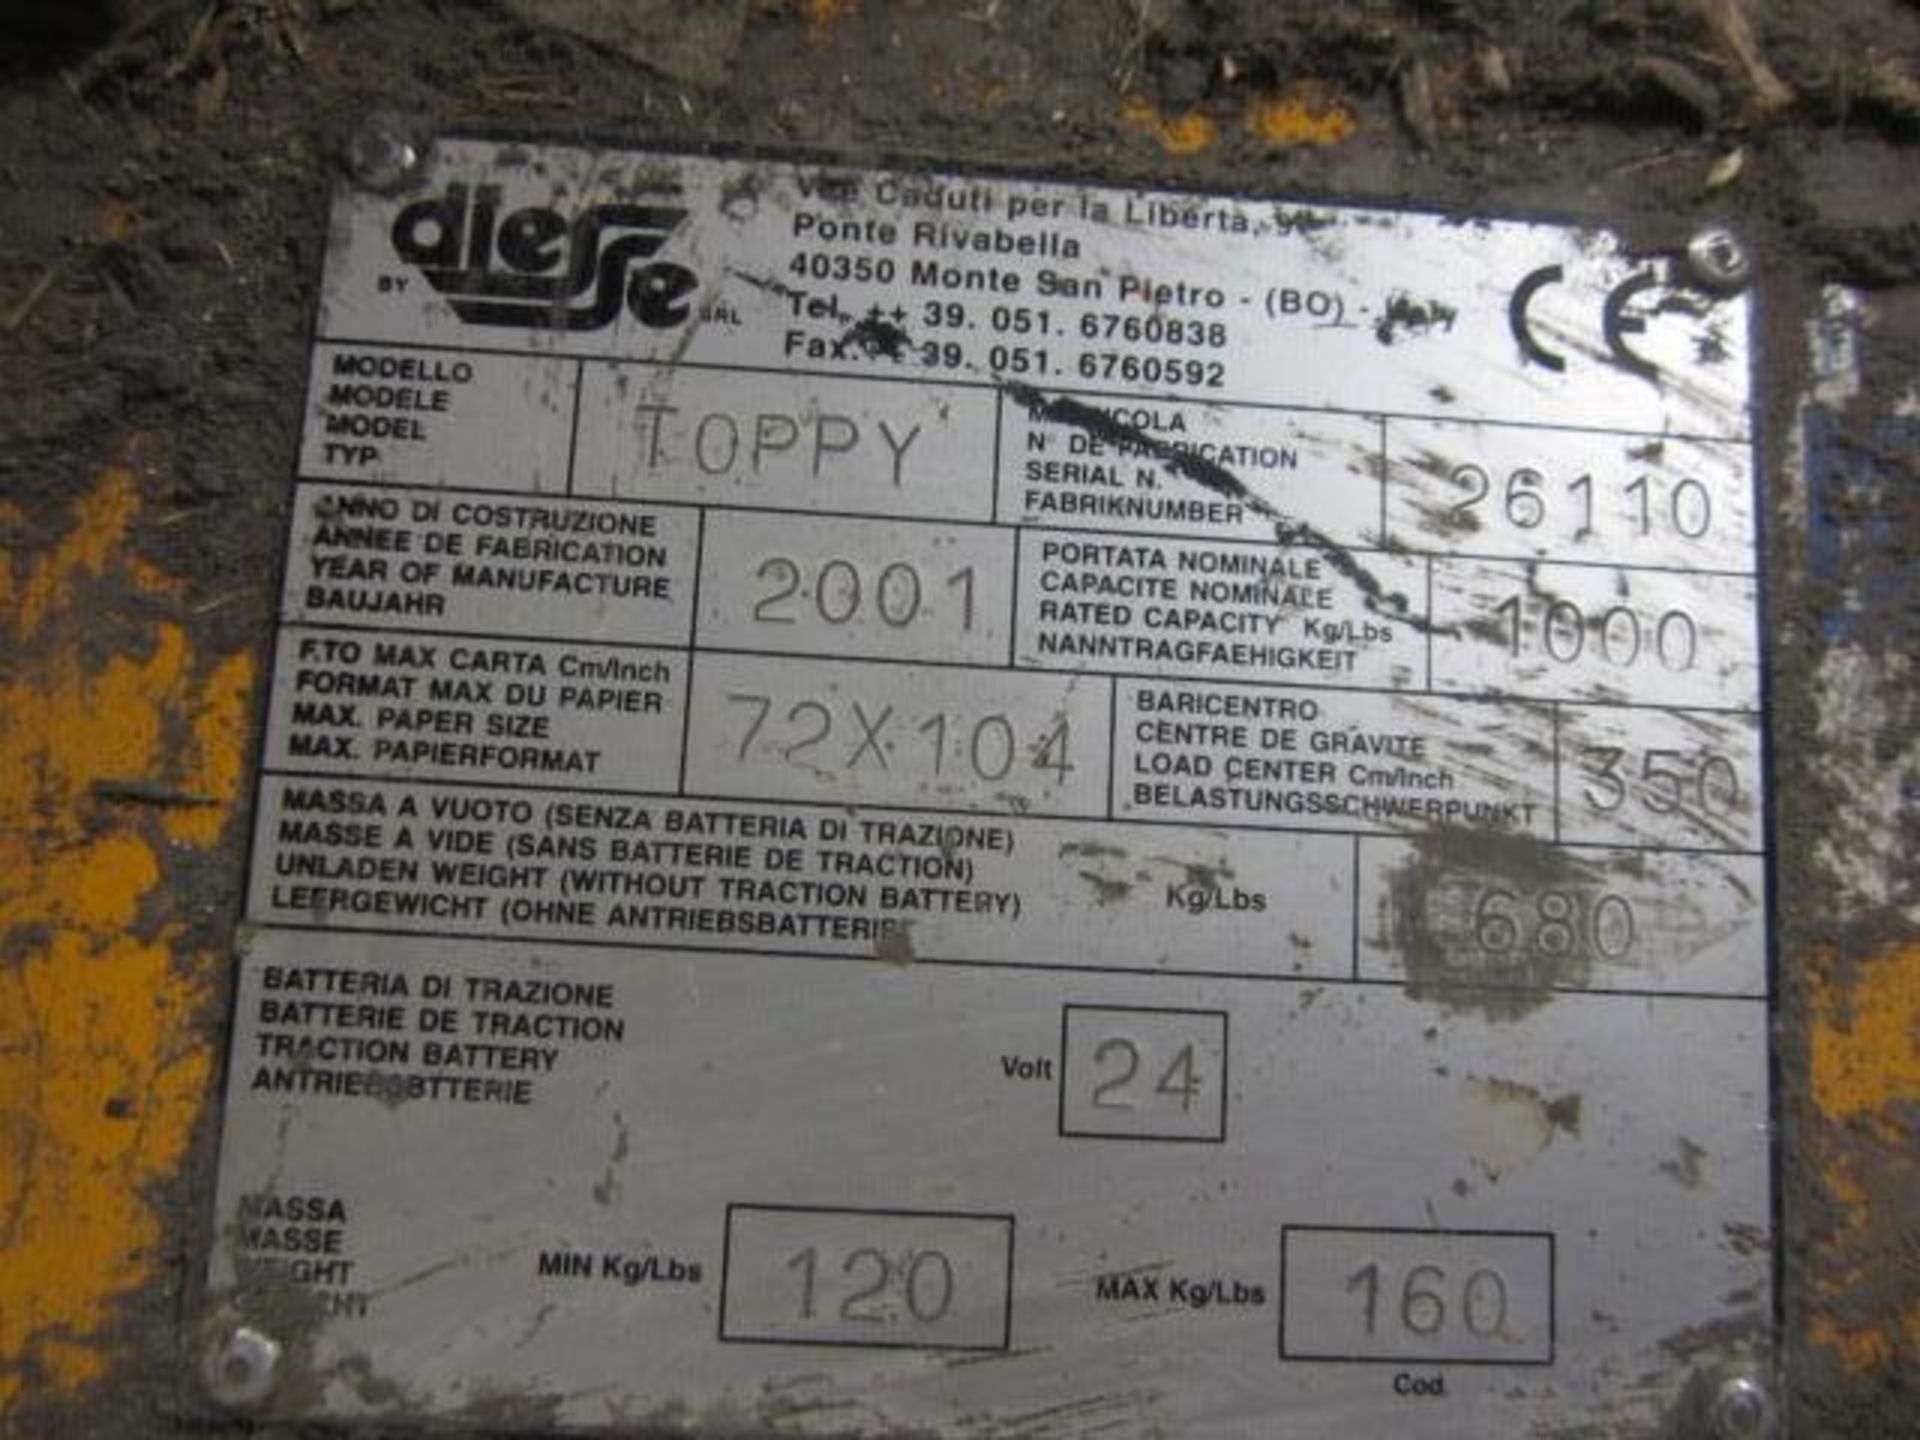 Diesse Toppy battery operated pedestrian pile turner, capacity 1000kg, serial no. 26110 (2001), - Bild 3 aus 5